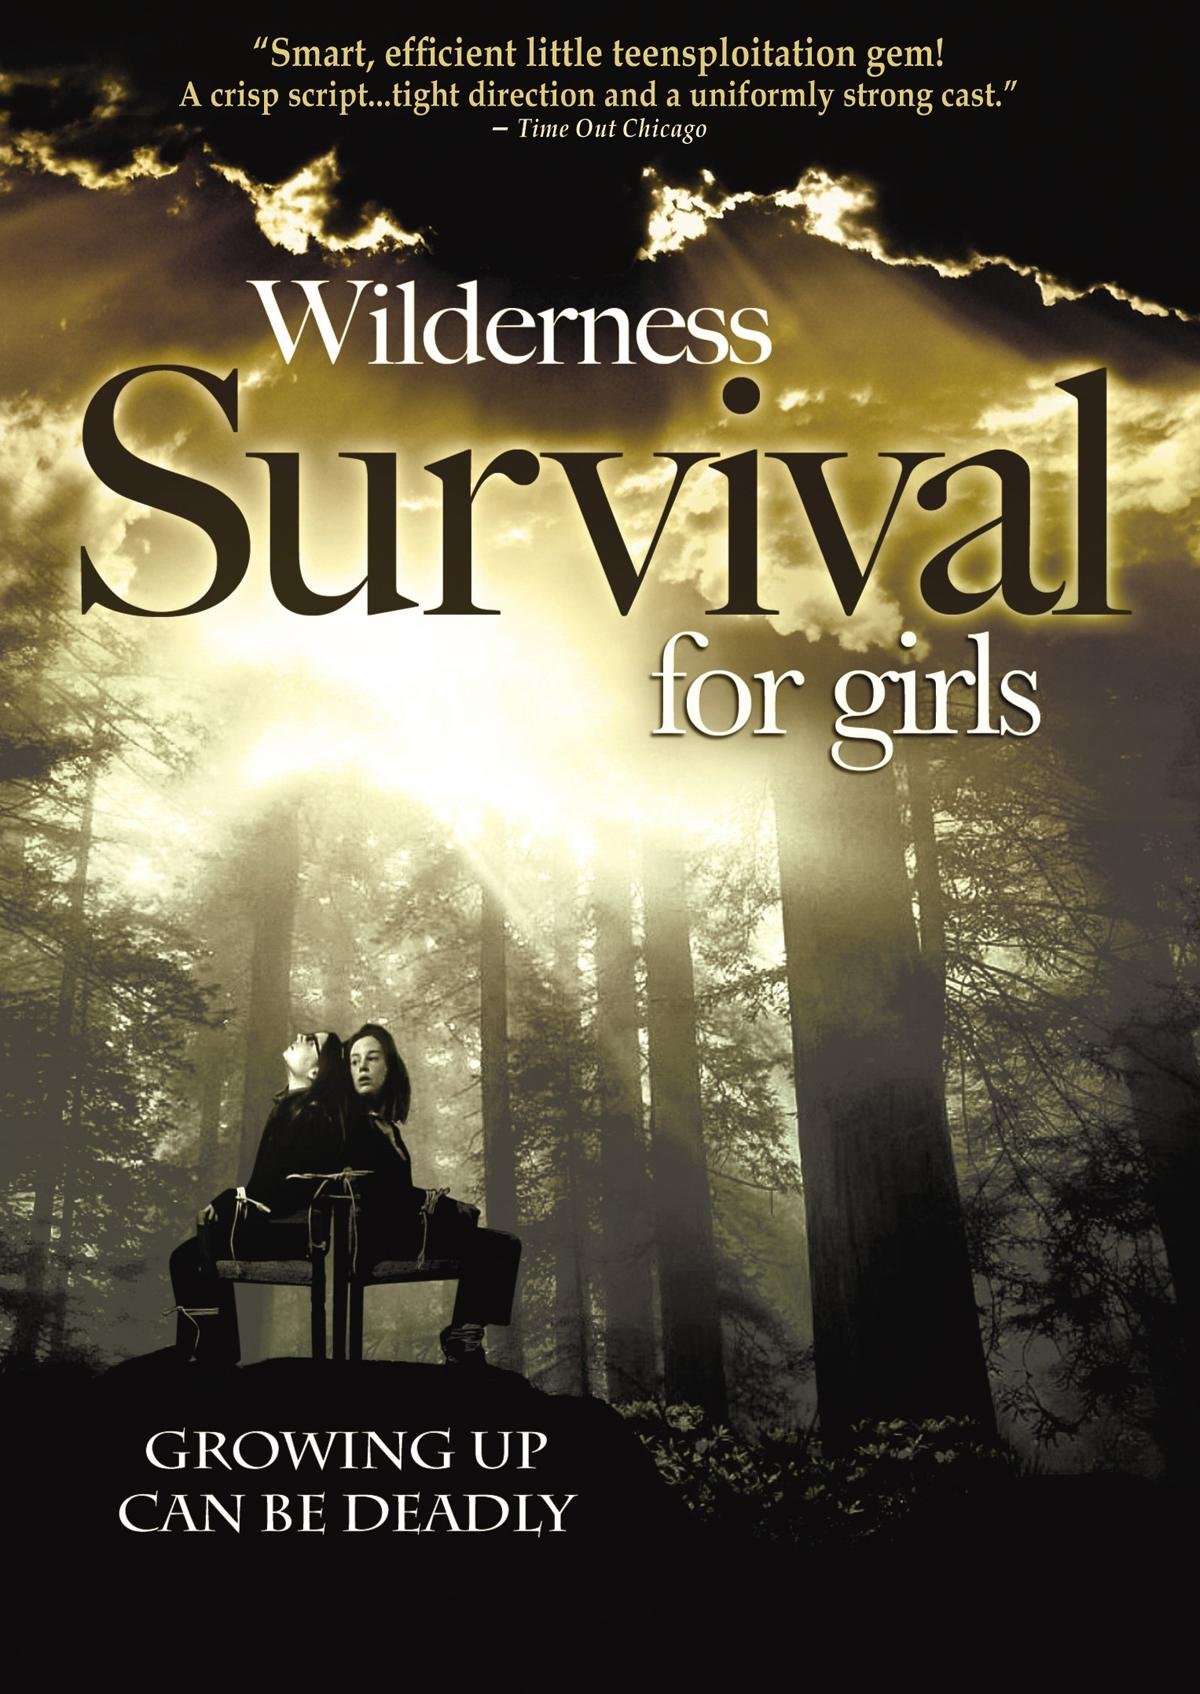 Wilderness Survival for Girls (2004) Screenshot 1